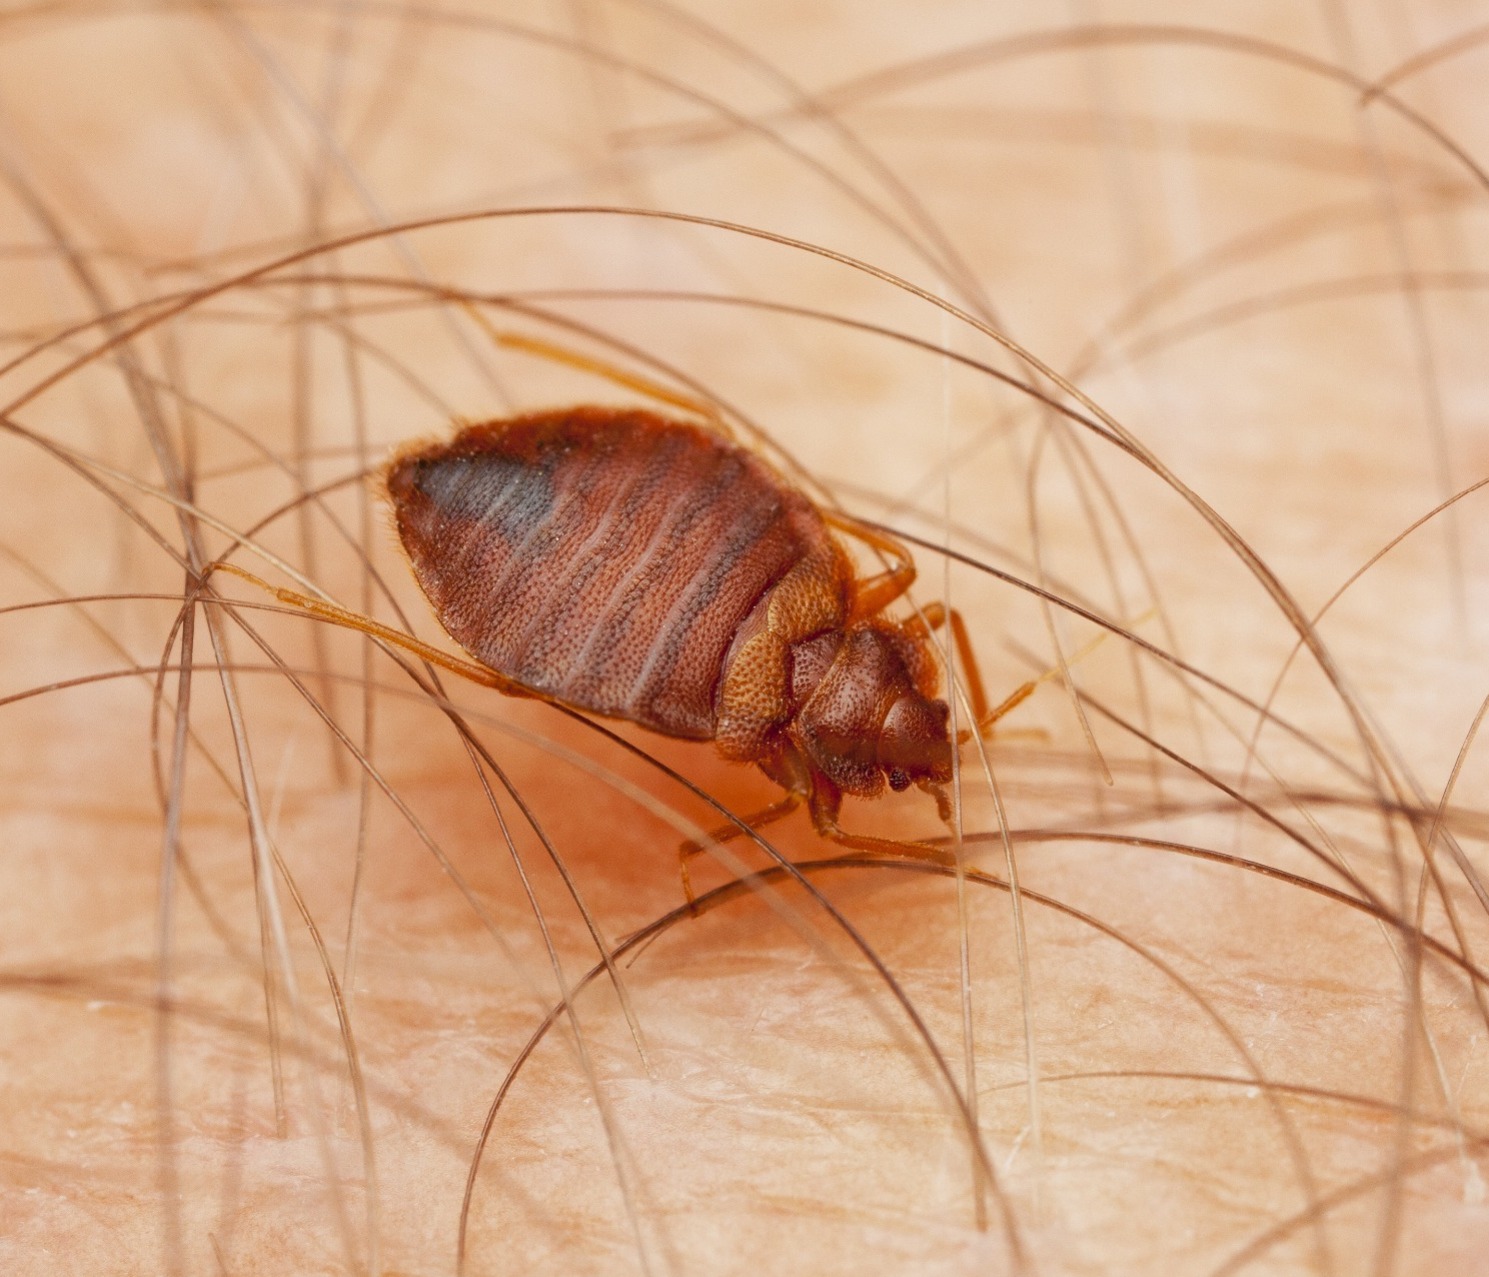 Bedbug on skin